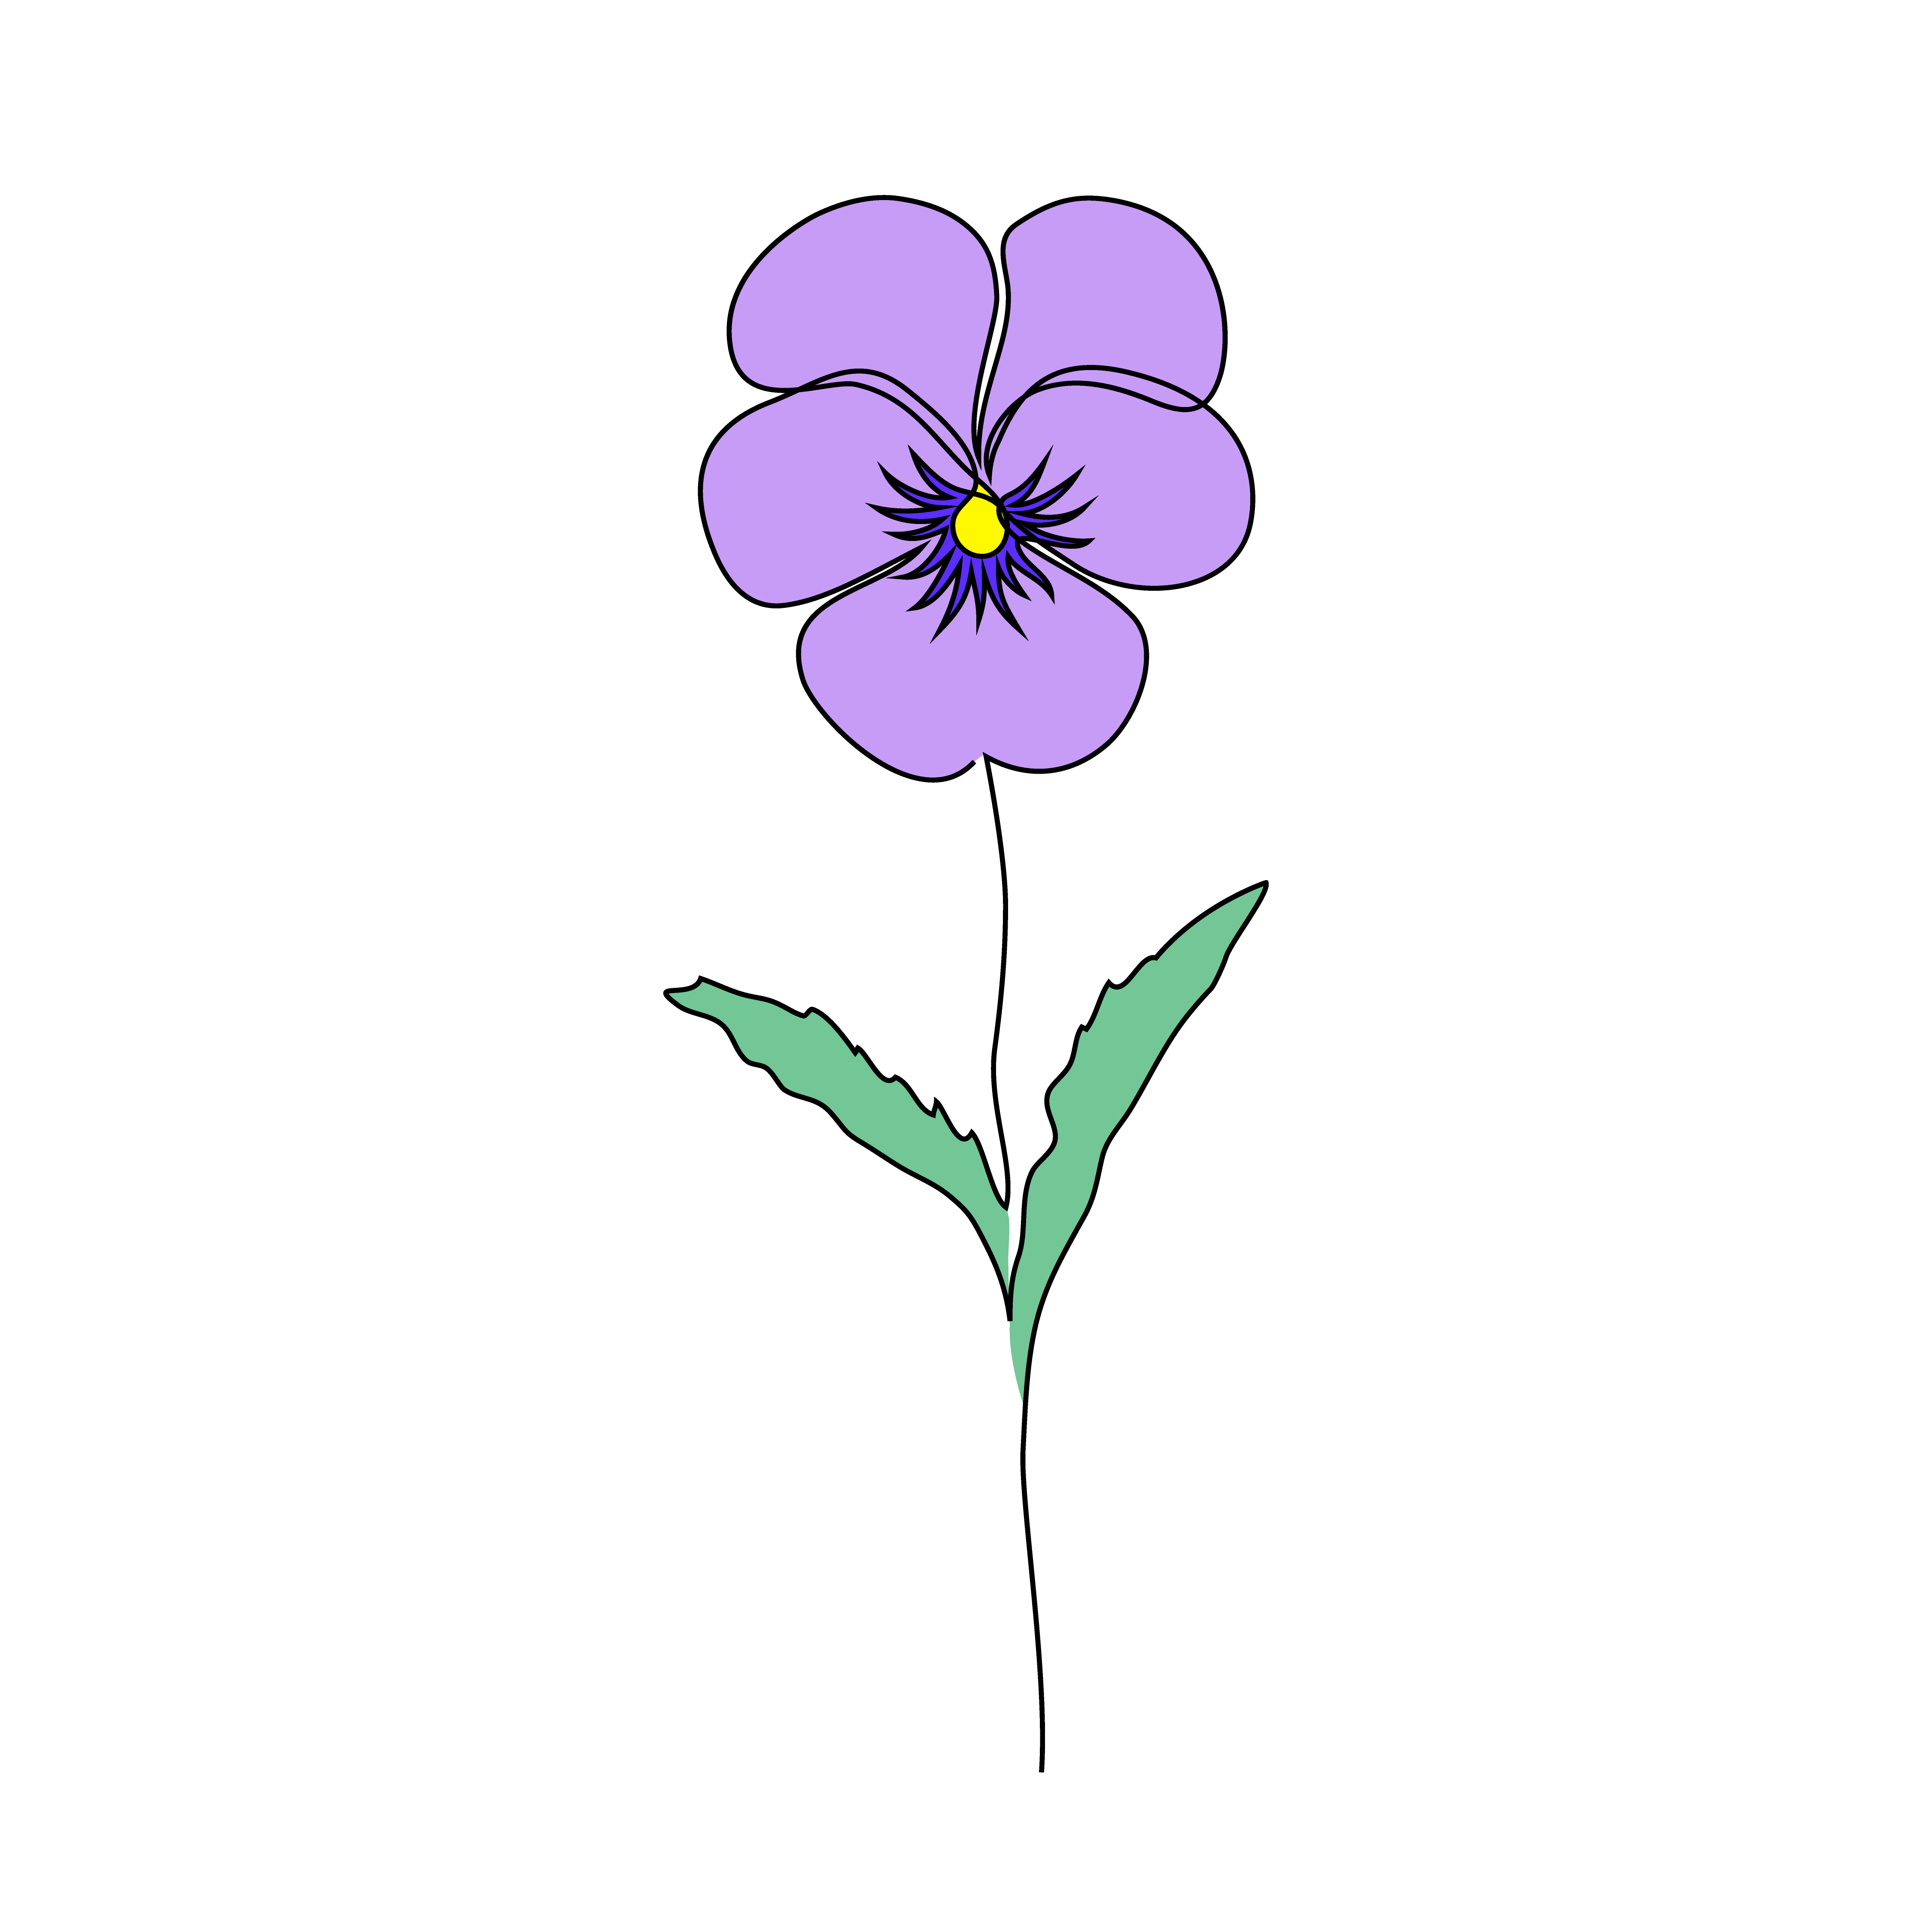 Violet flower on white background. One line drawing style.. Violet flower on white